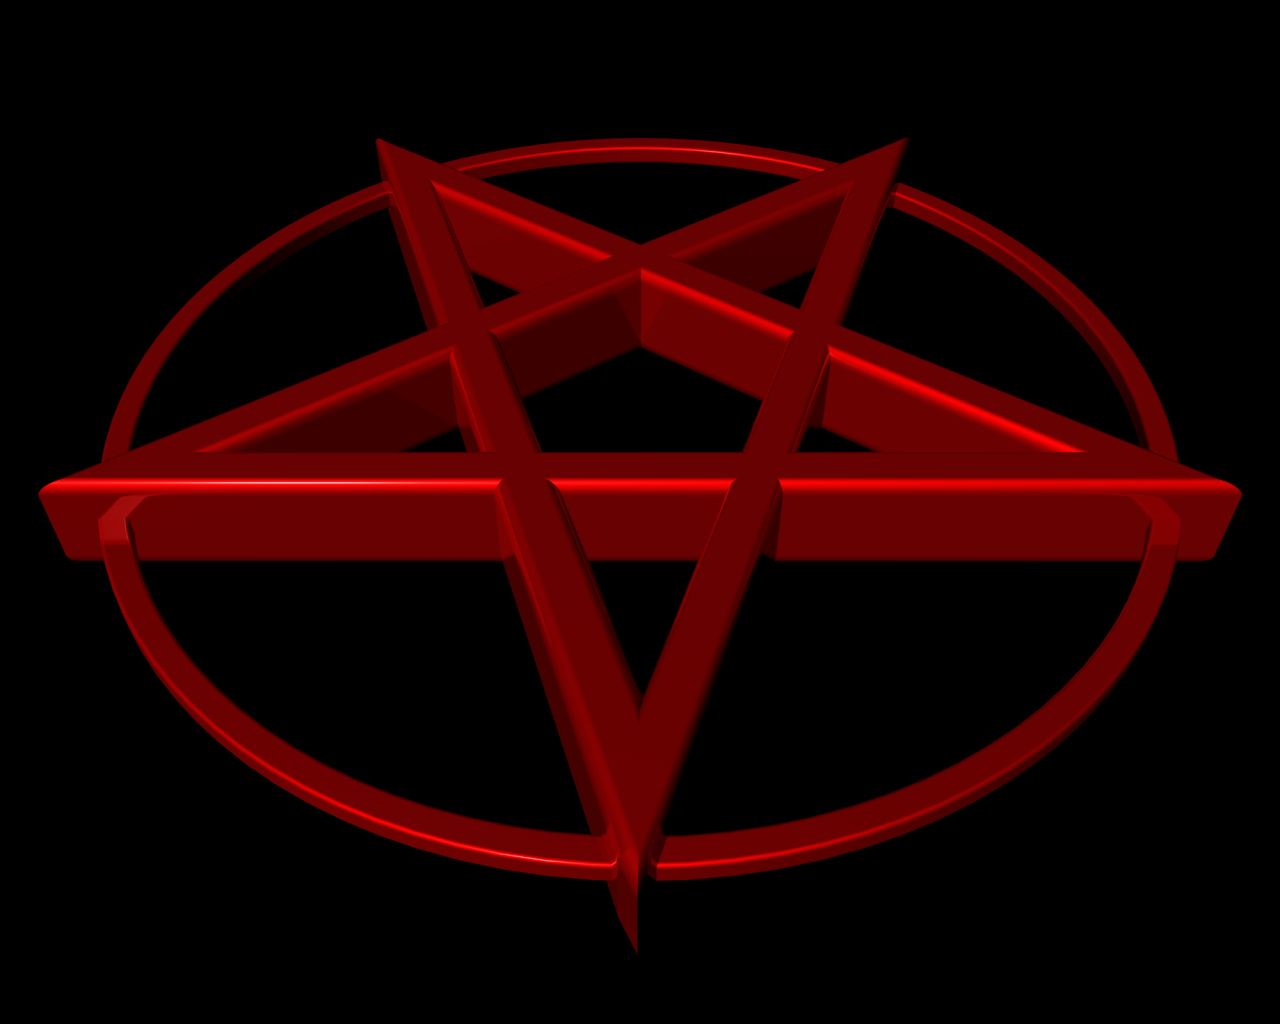 pentagram wallpaper,red,symbol,logo,symmetry,graphics